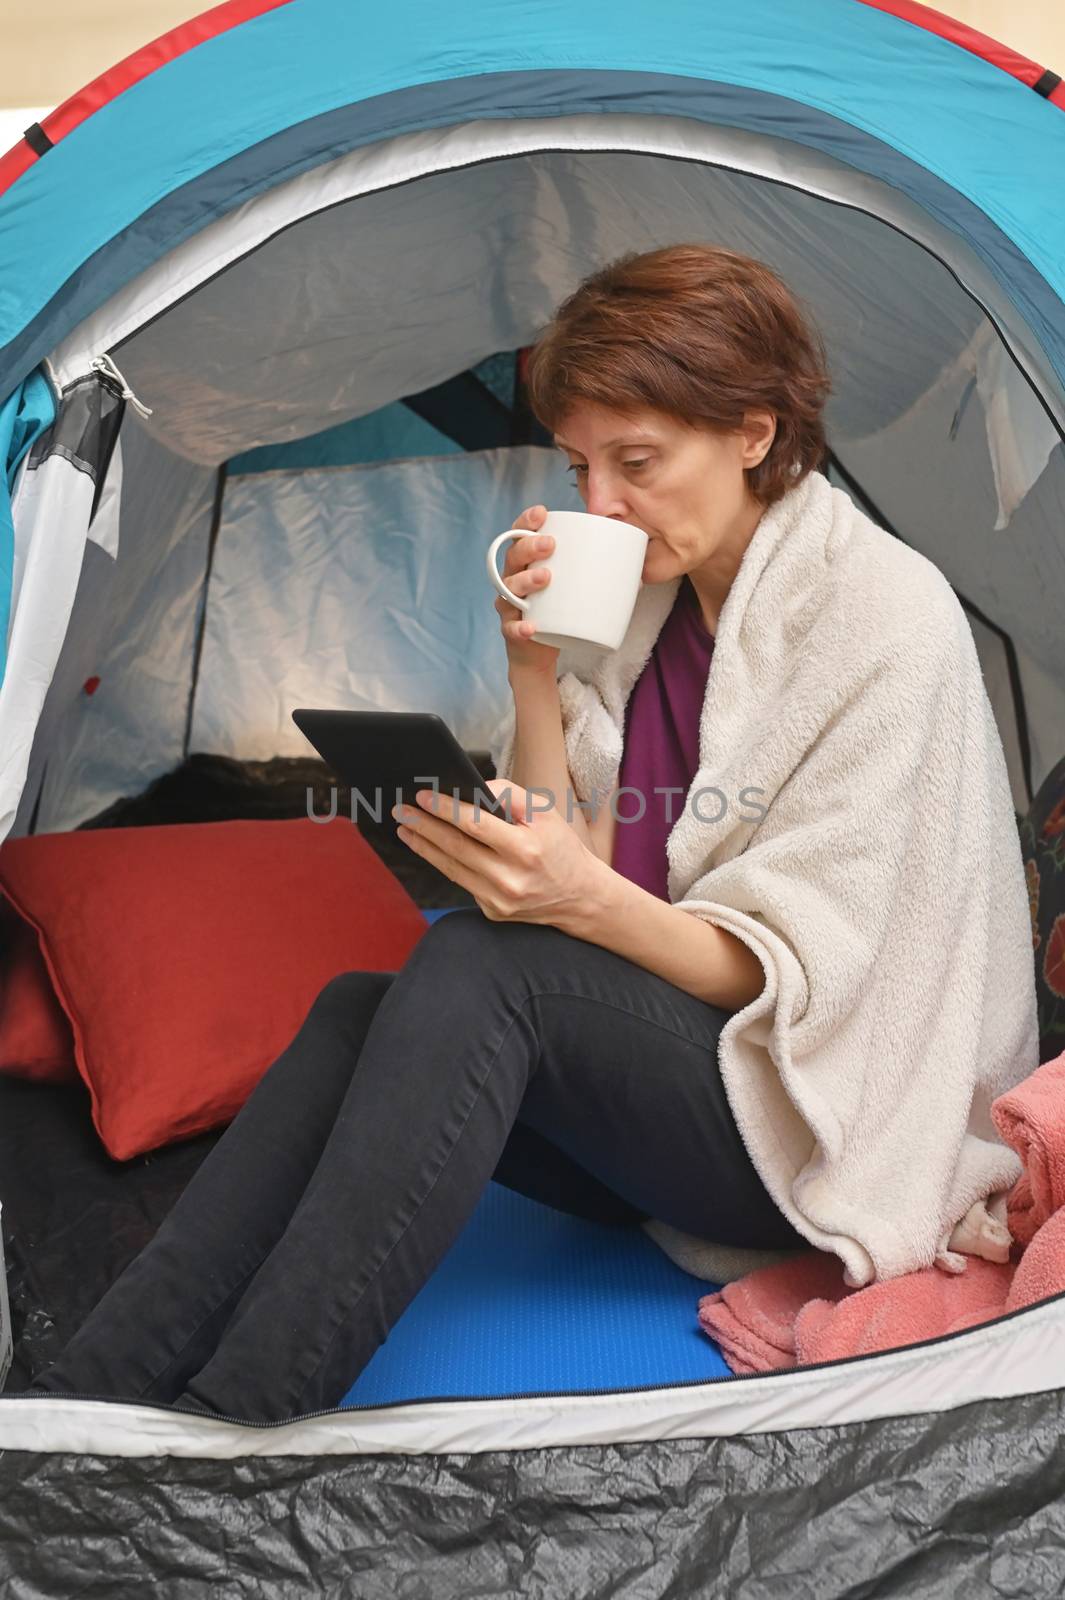 Quarantine At Home. Woman sit inside a tent enjoying a cup of tea